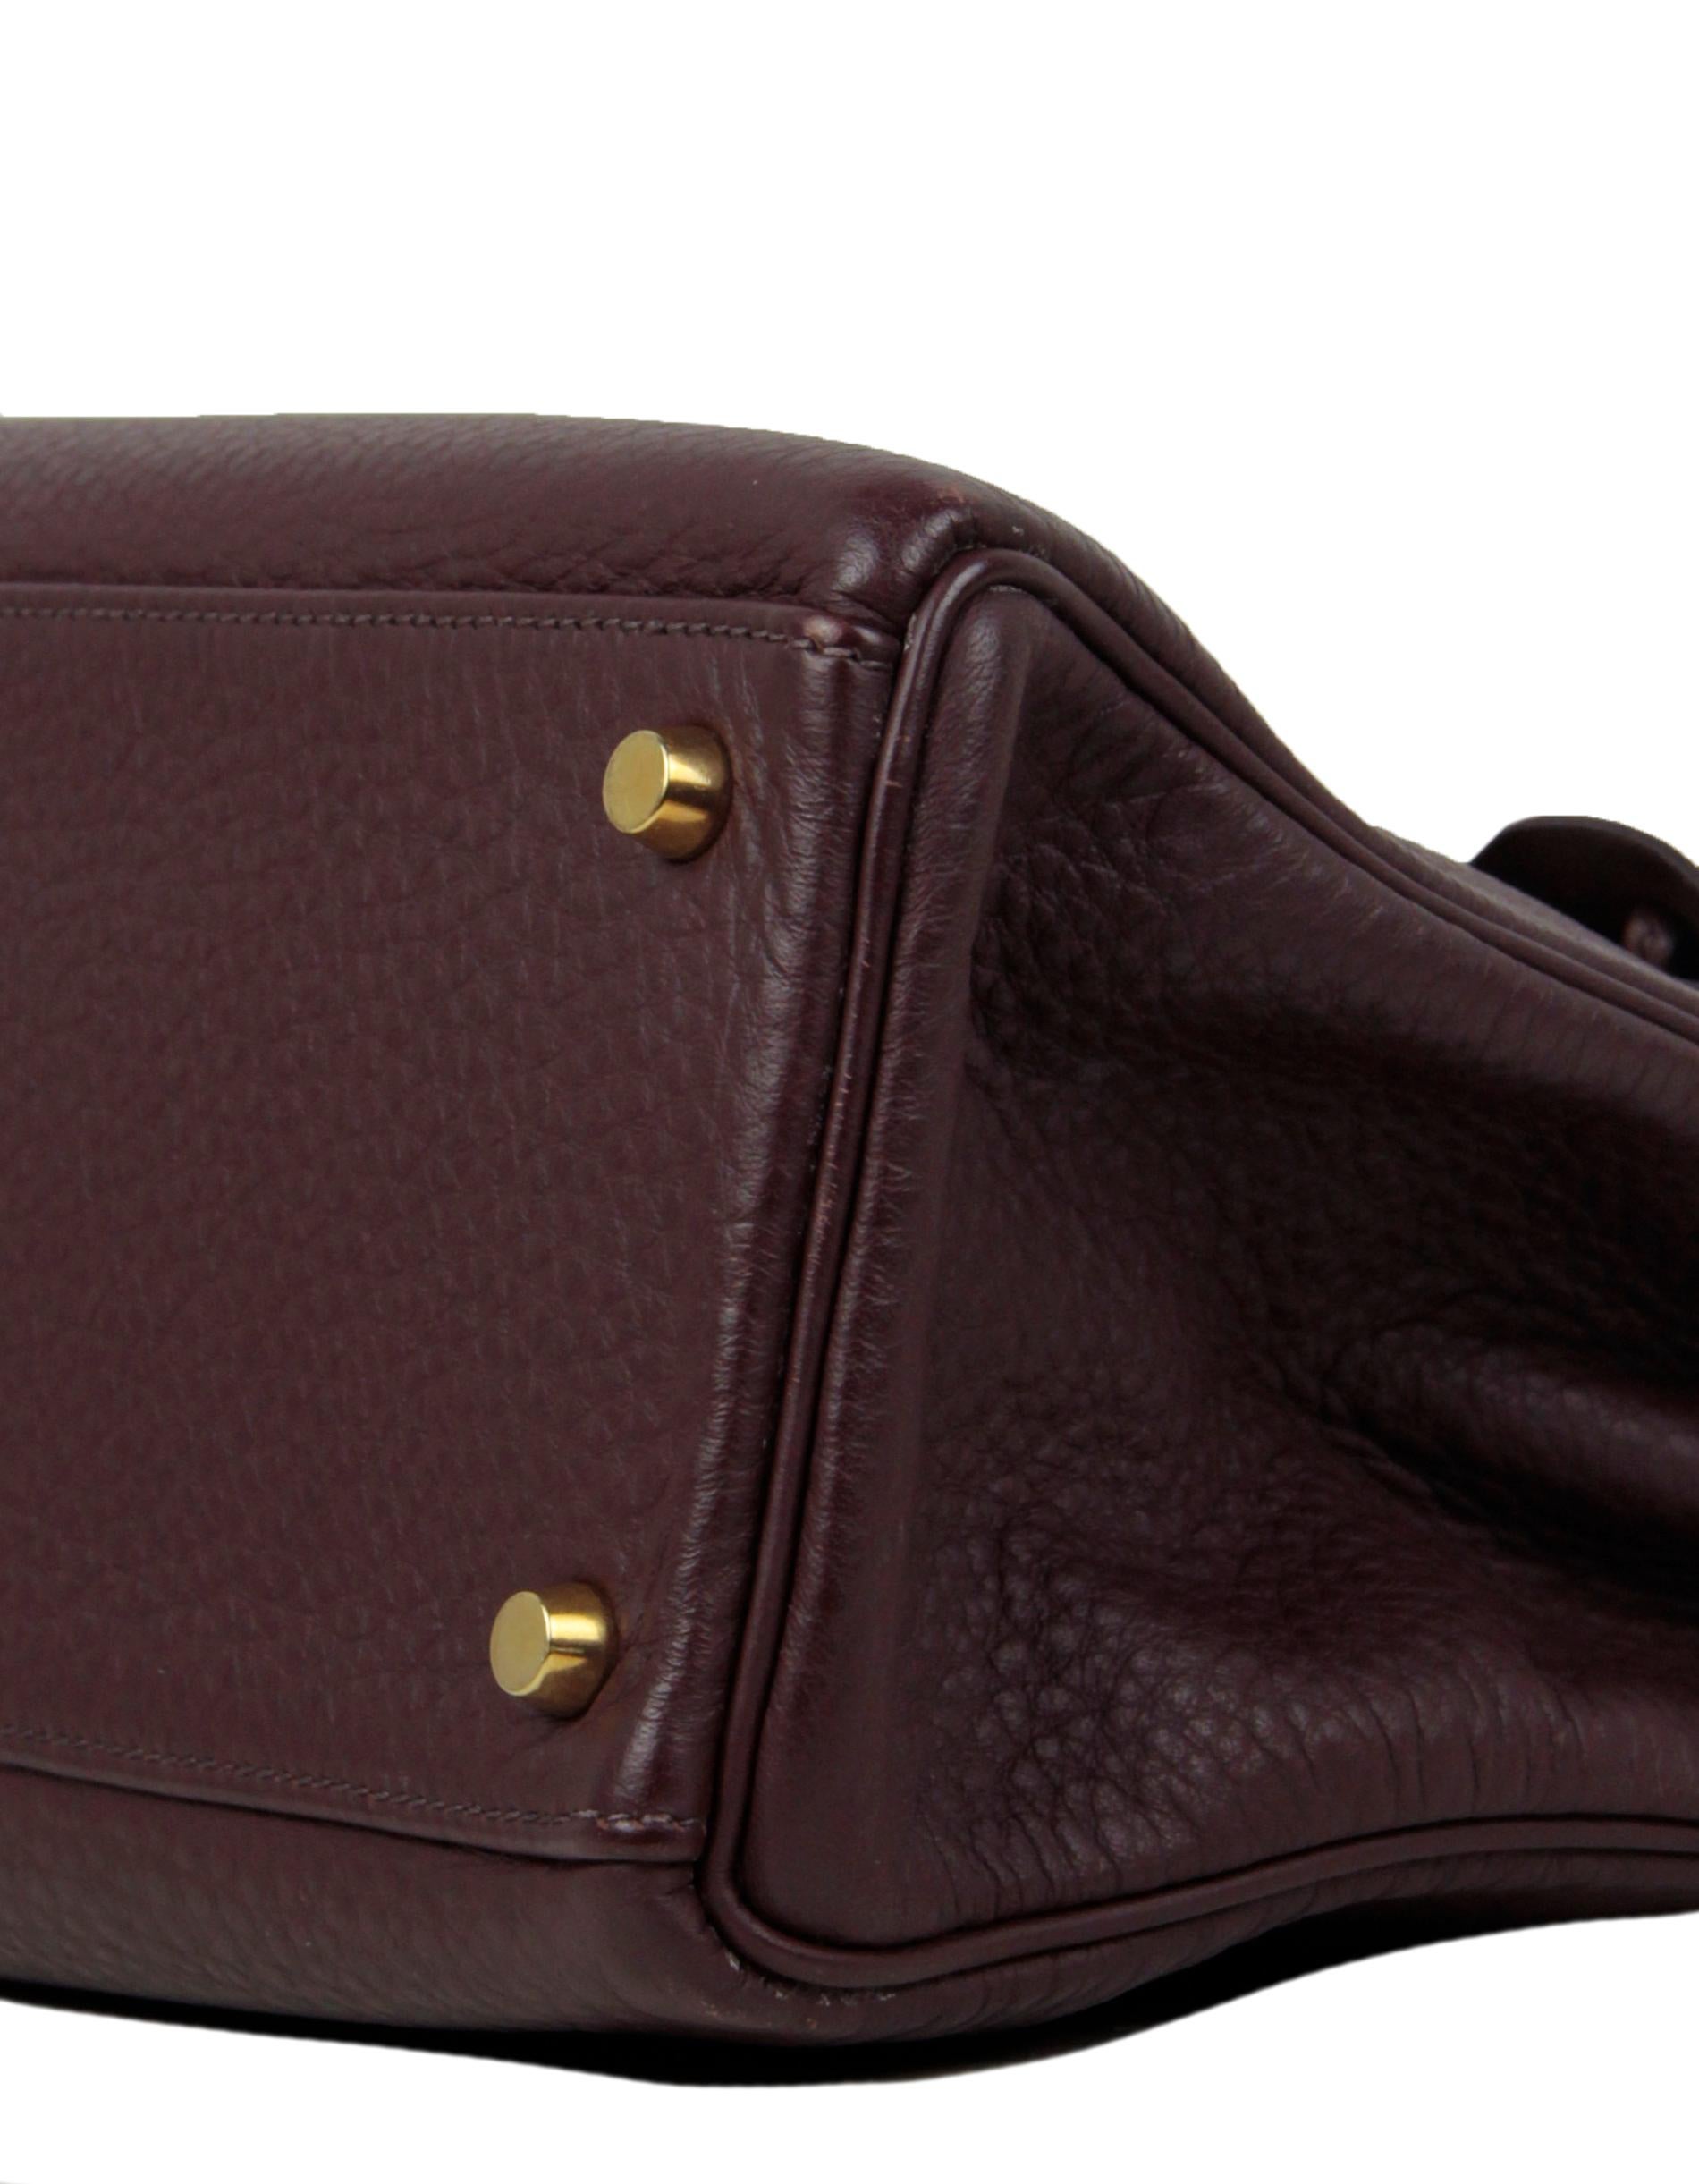 Women's Hermes Brown Clemence Leather Retourne 32cm Kelly Bag GHW For Sale